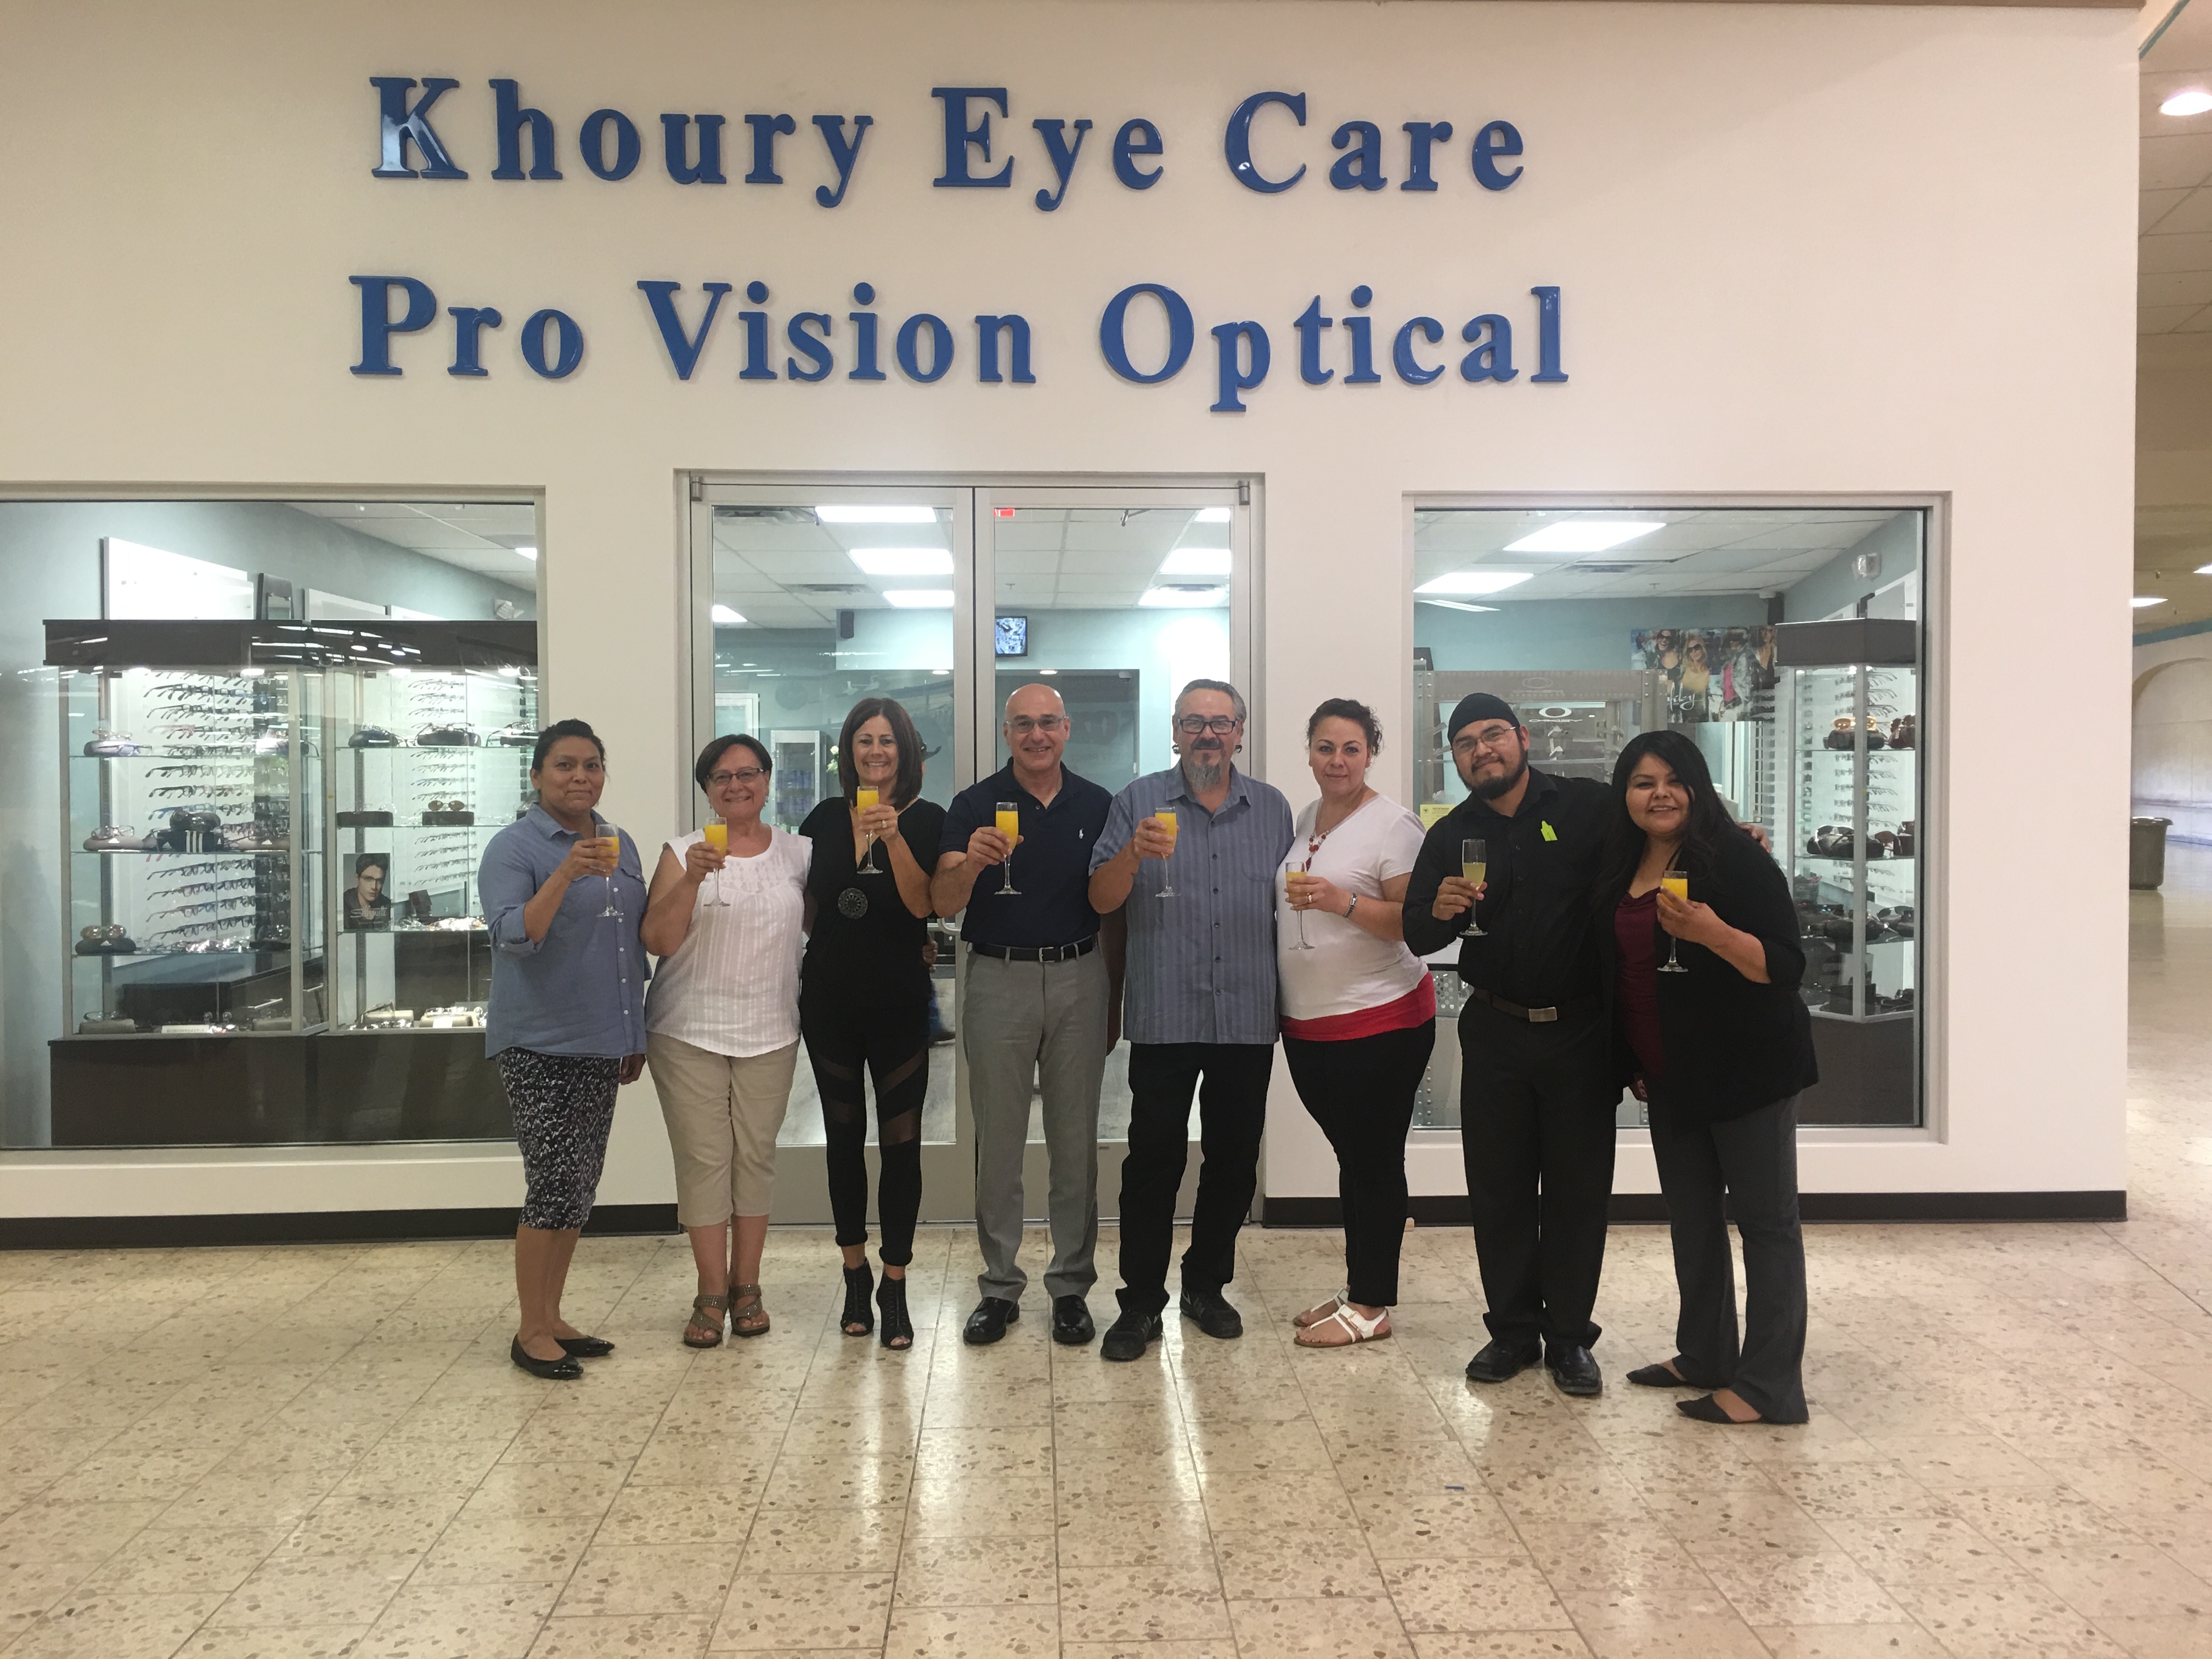 Khoury Eye Care's Gallery - Khoury Eye Care - Photo (13795)